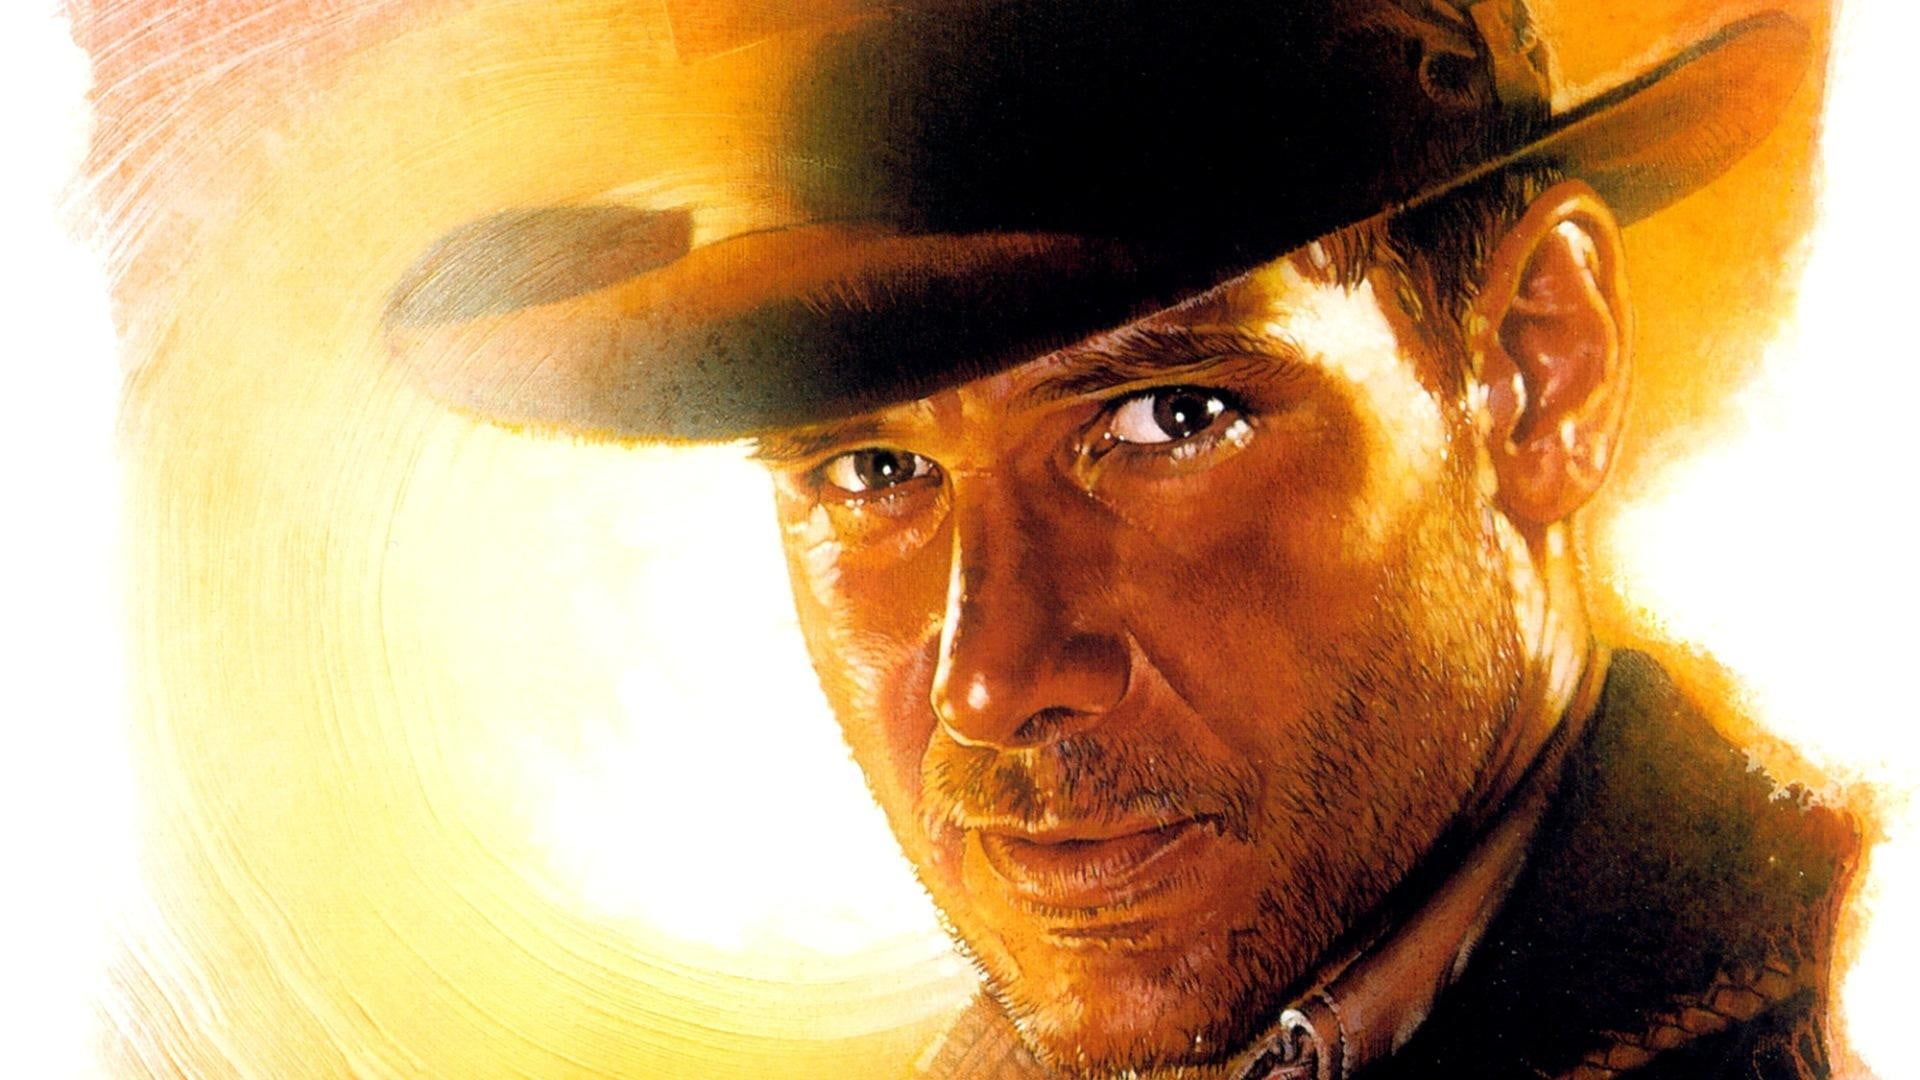 man's face illustration, movies, Indiana Jones, Harrison Ford